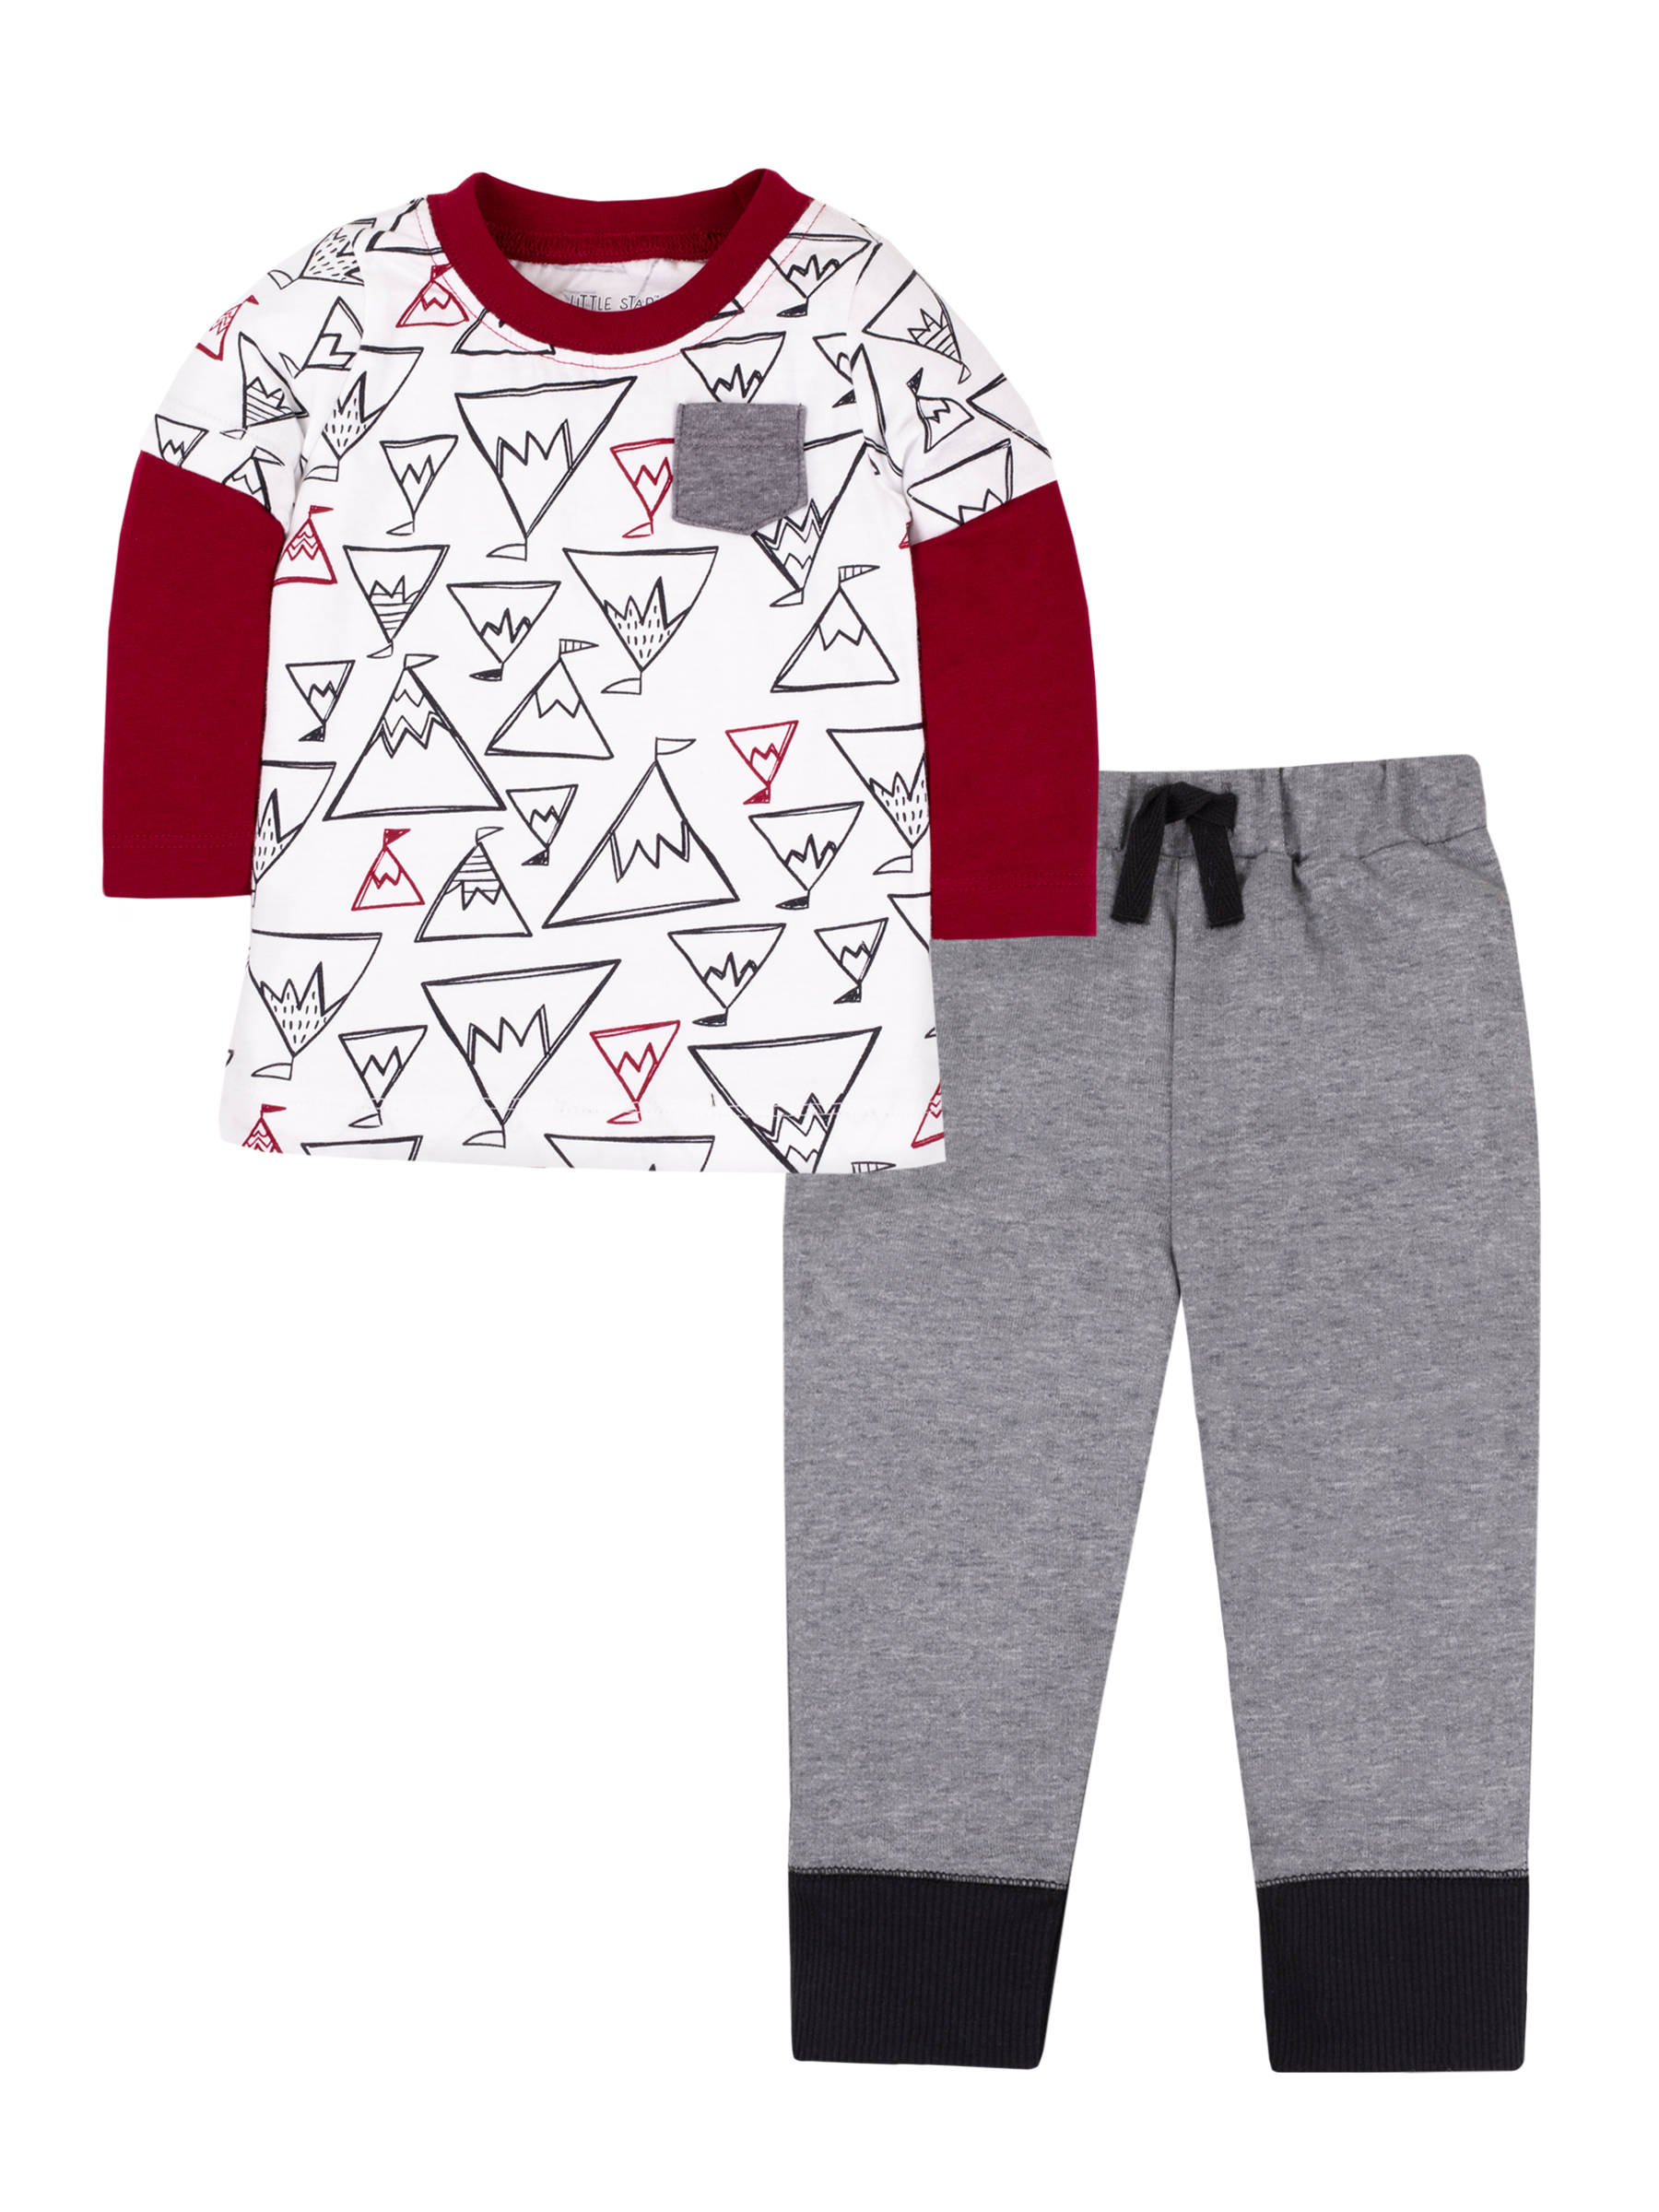 Little Star Organic Baby & Toddler Boy 2 Pc Long Sleeve Shirt & Pants Set, Size 3 Months-5T - image 1 of 5